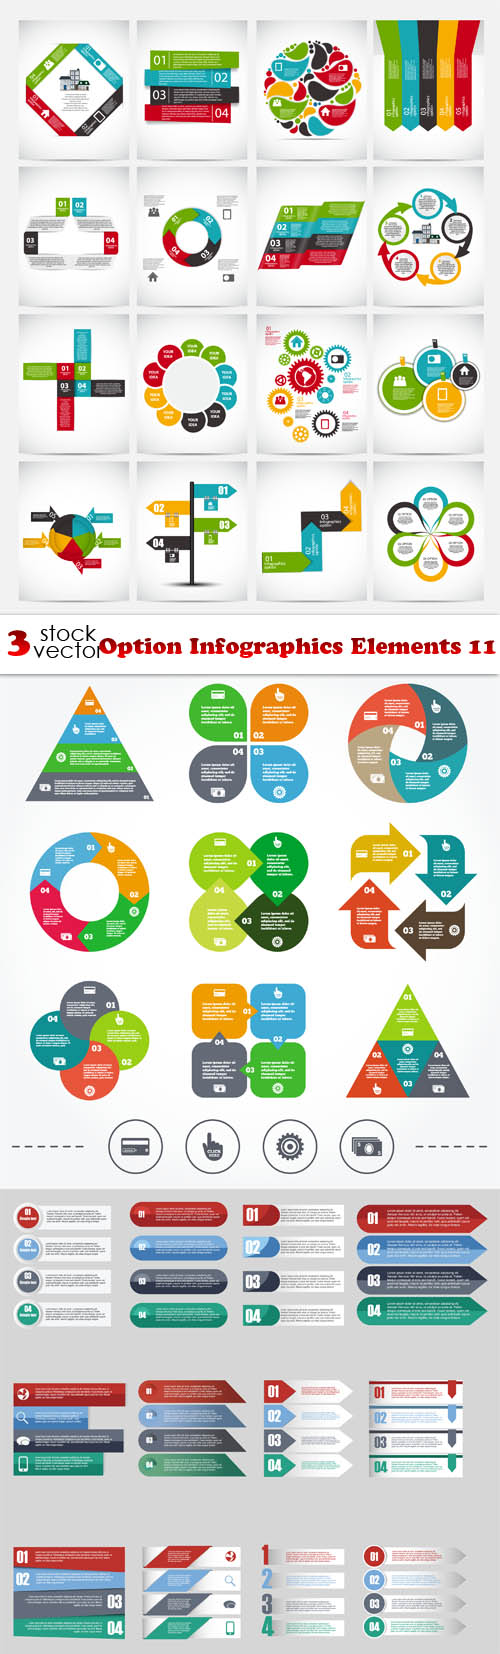 Vectors - Option Infographics Elements 11